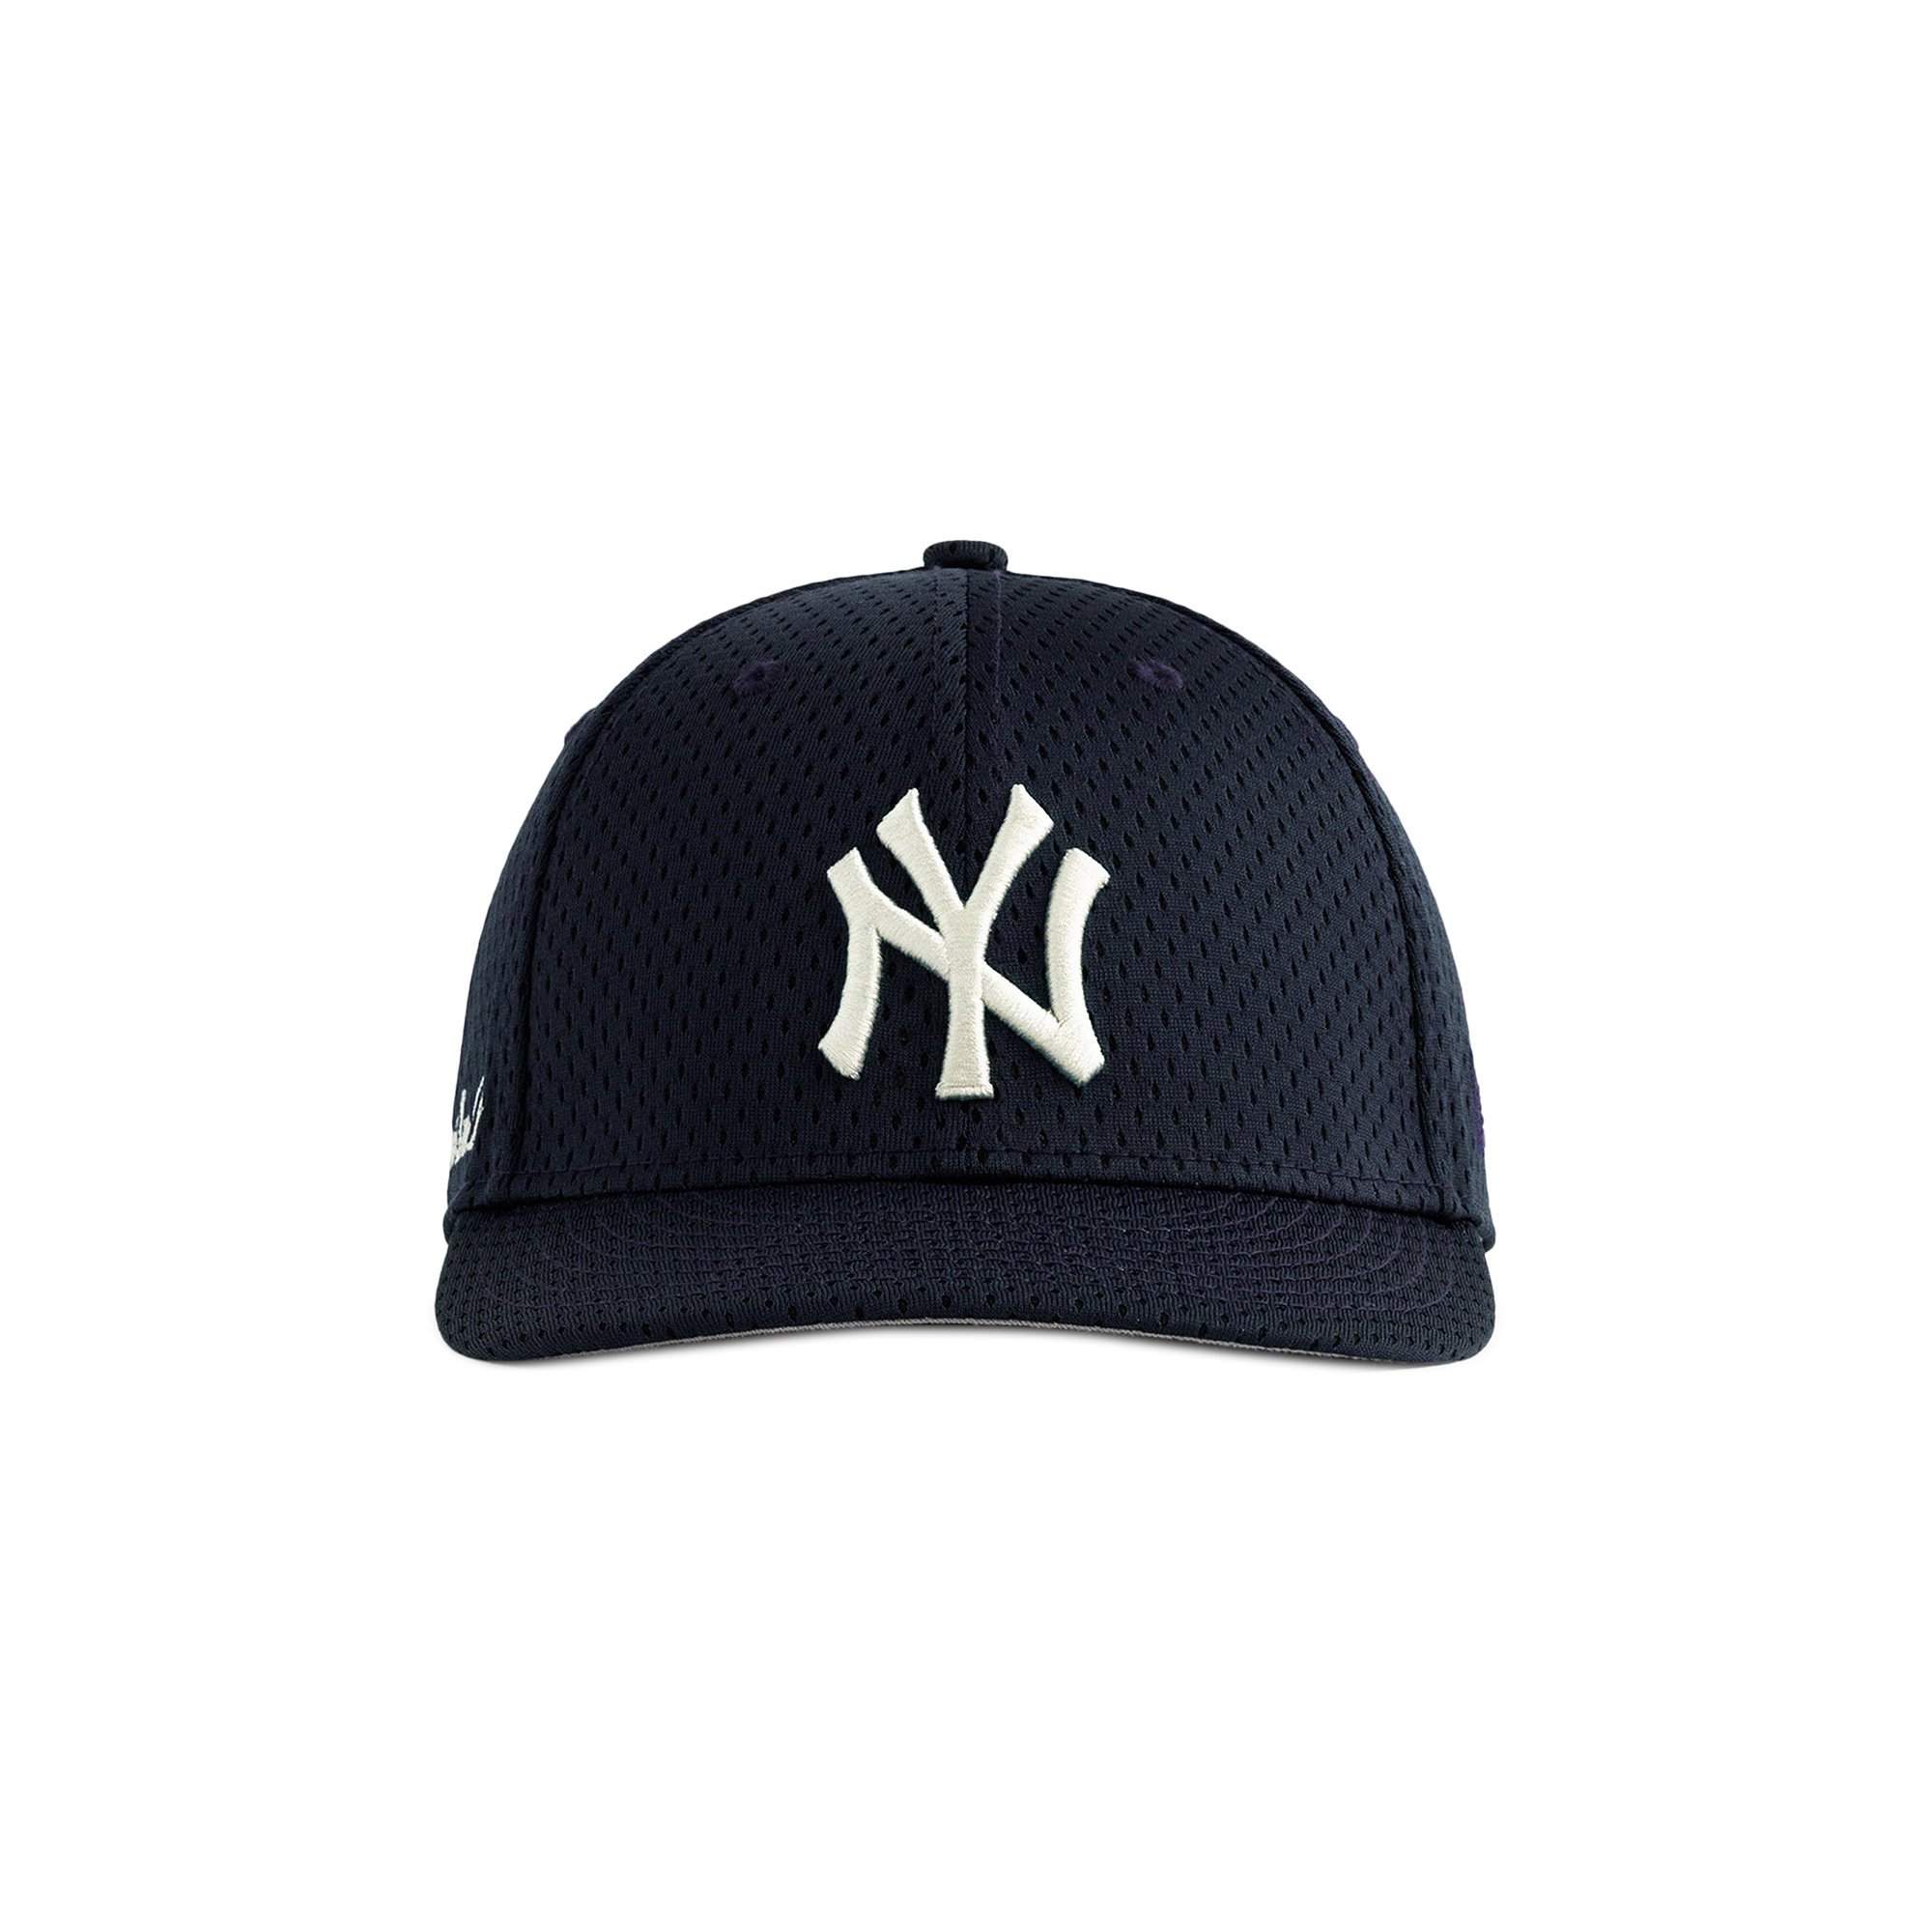 AIME LEON DORE New Era Yankees Mesh Hat-